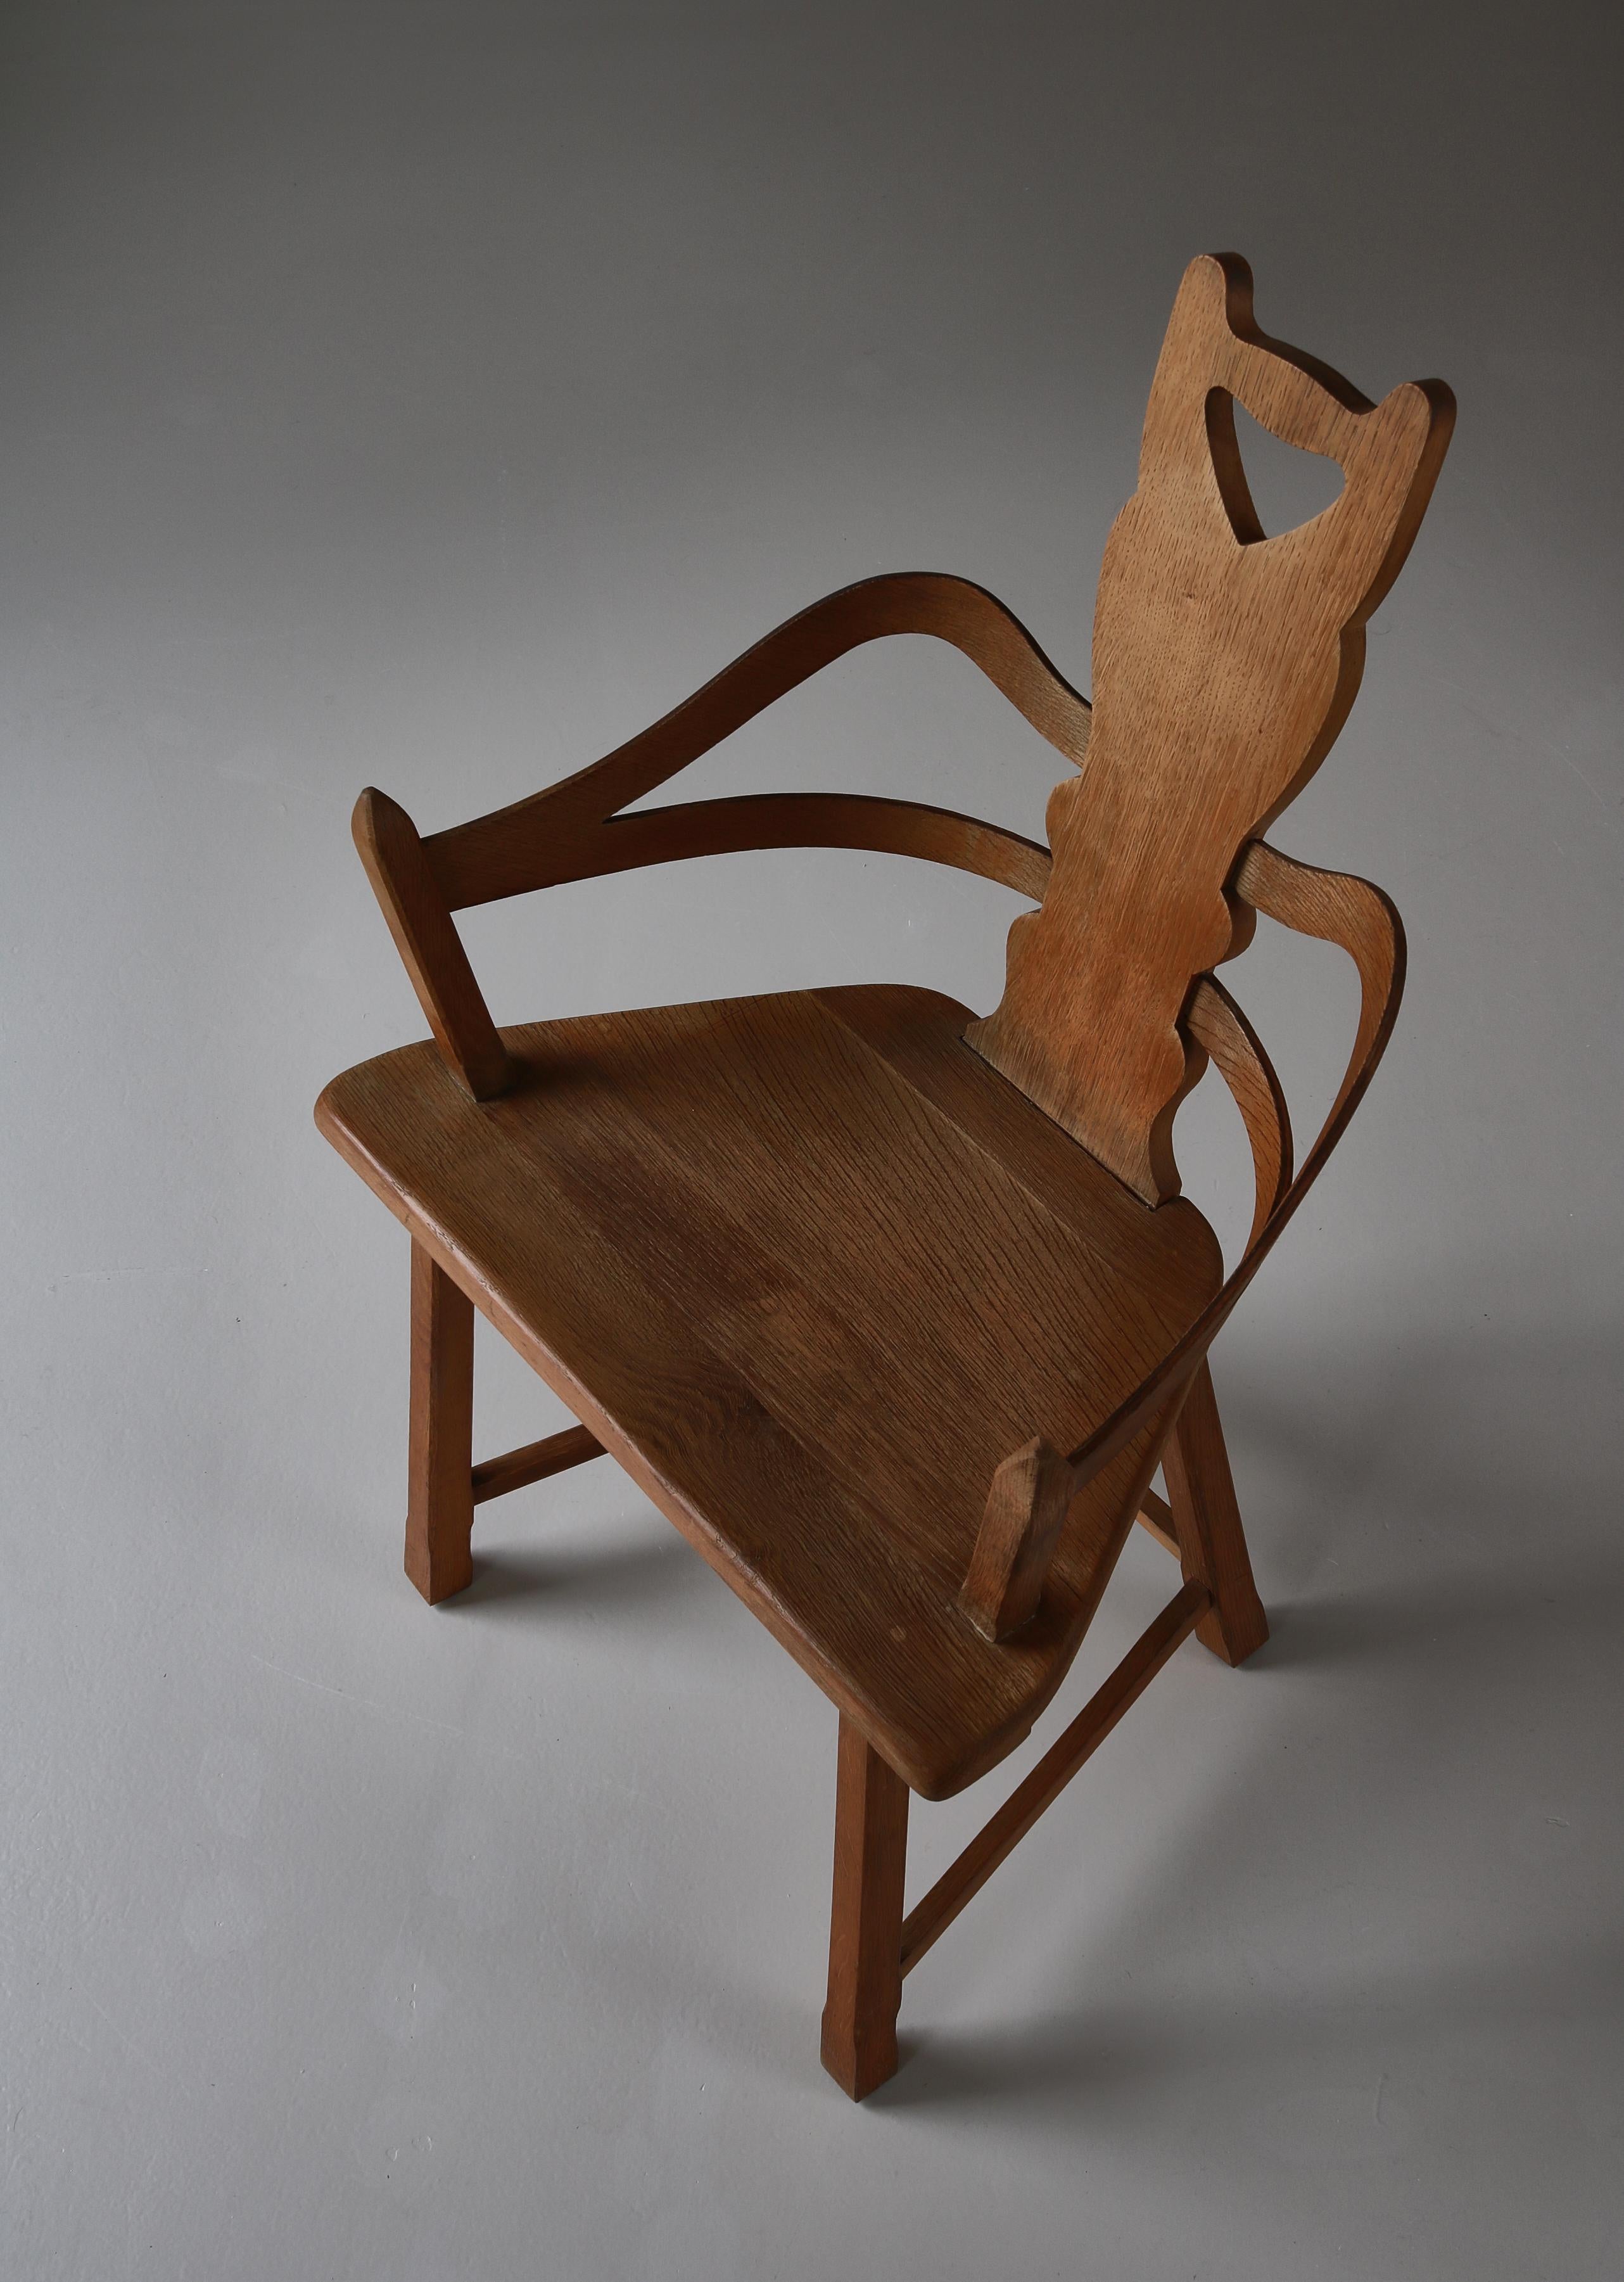 Swedish Folk Art Chair Handmade in Oakwood, 1900s For Sale 3